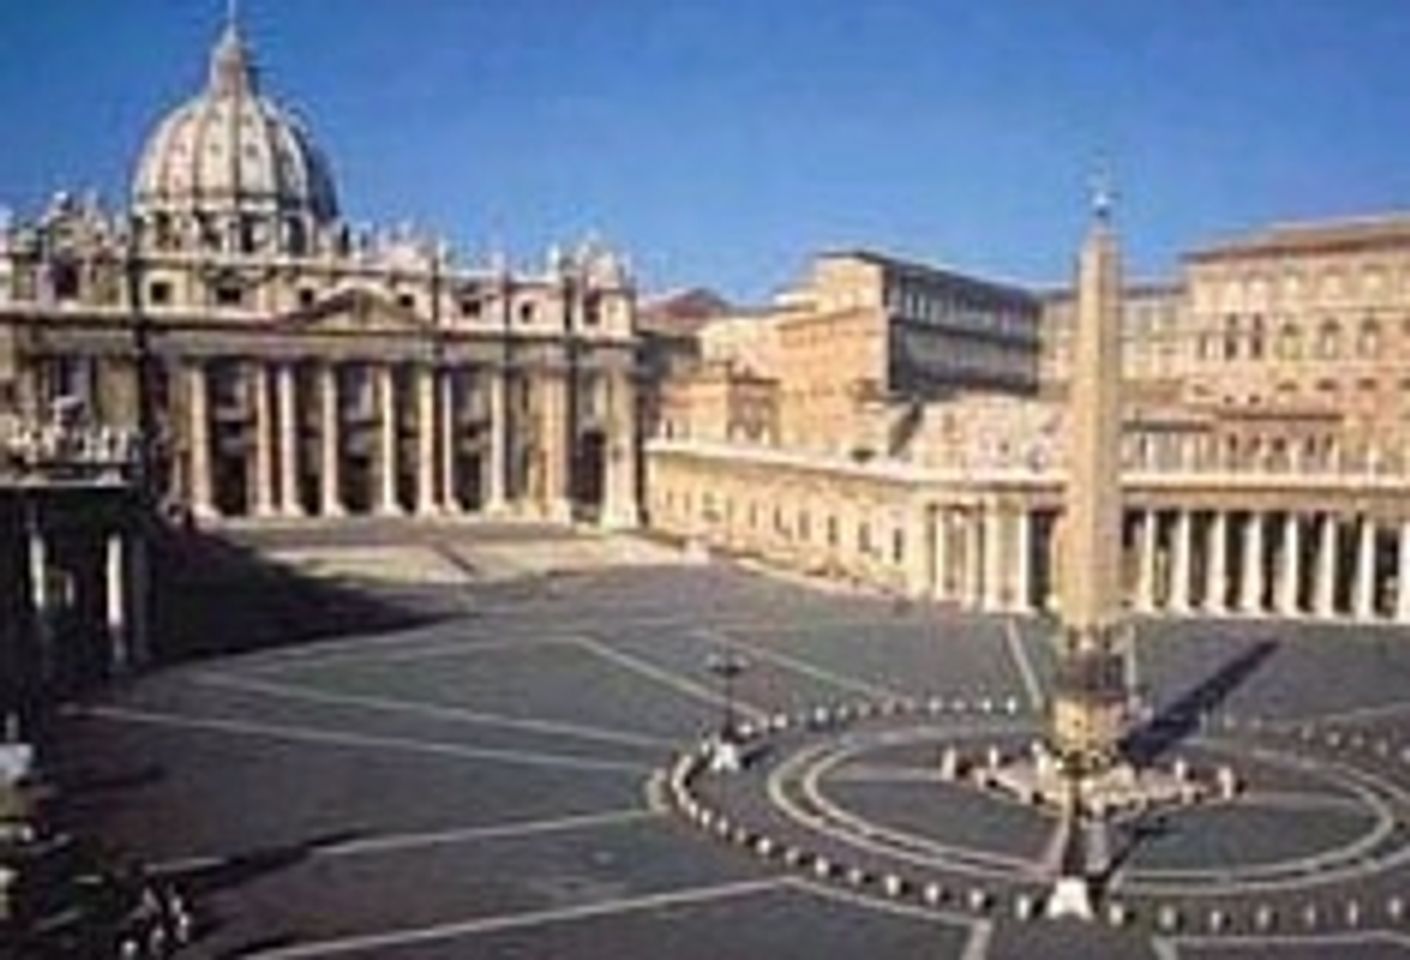 Porn Booming Despite Recession In Italy, Vatican Study Says